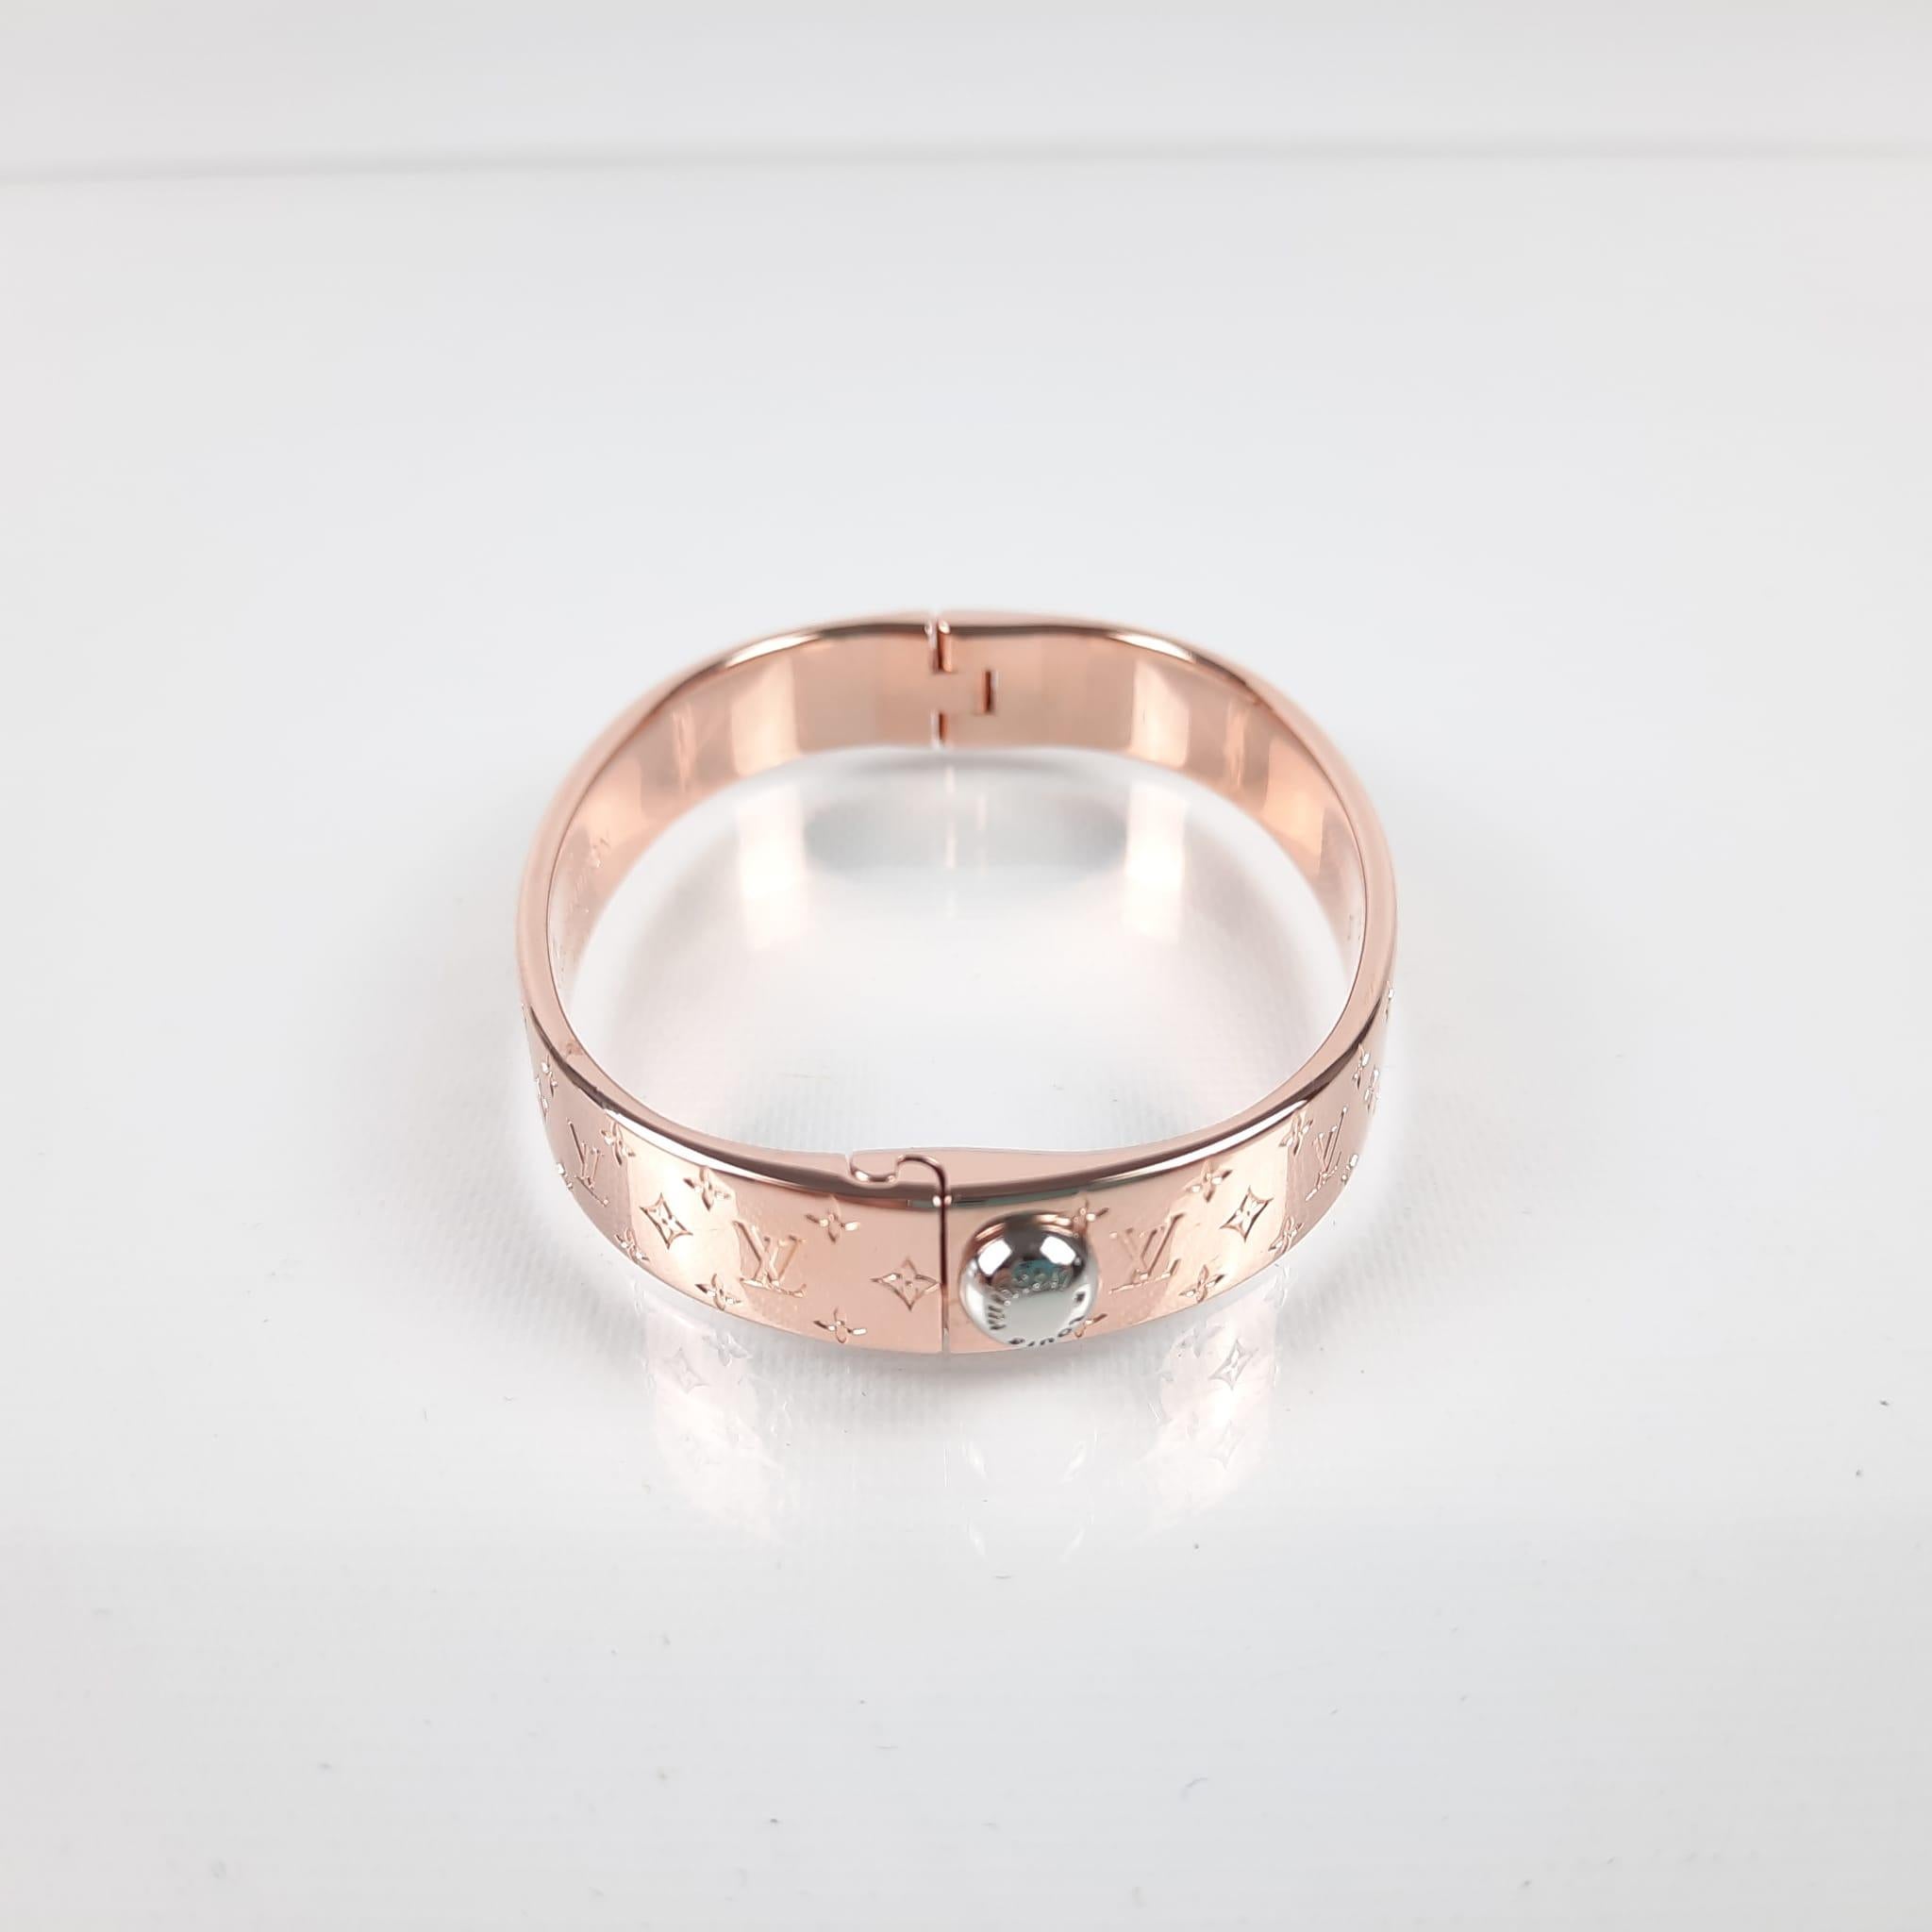 Sold at Auction: Louis Vuitton, Louis Vuitton Rose Gold Nanogram Ring